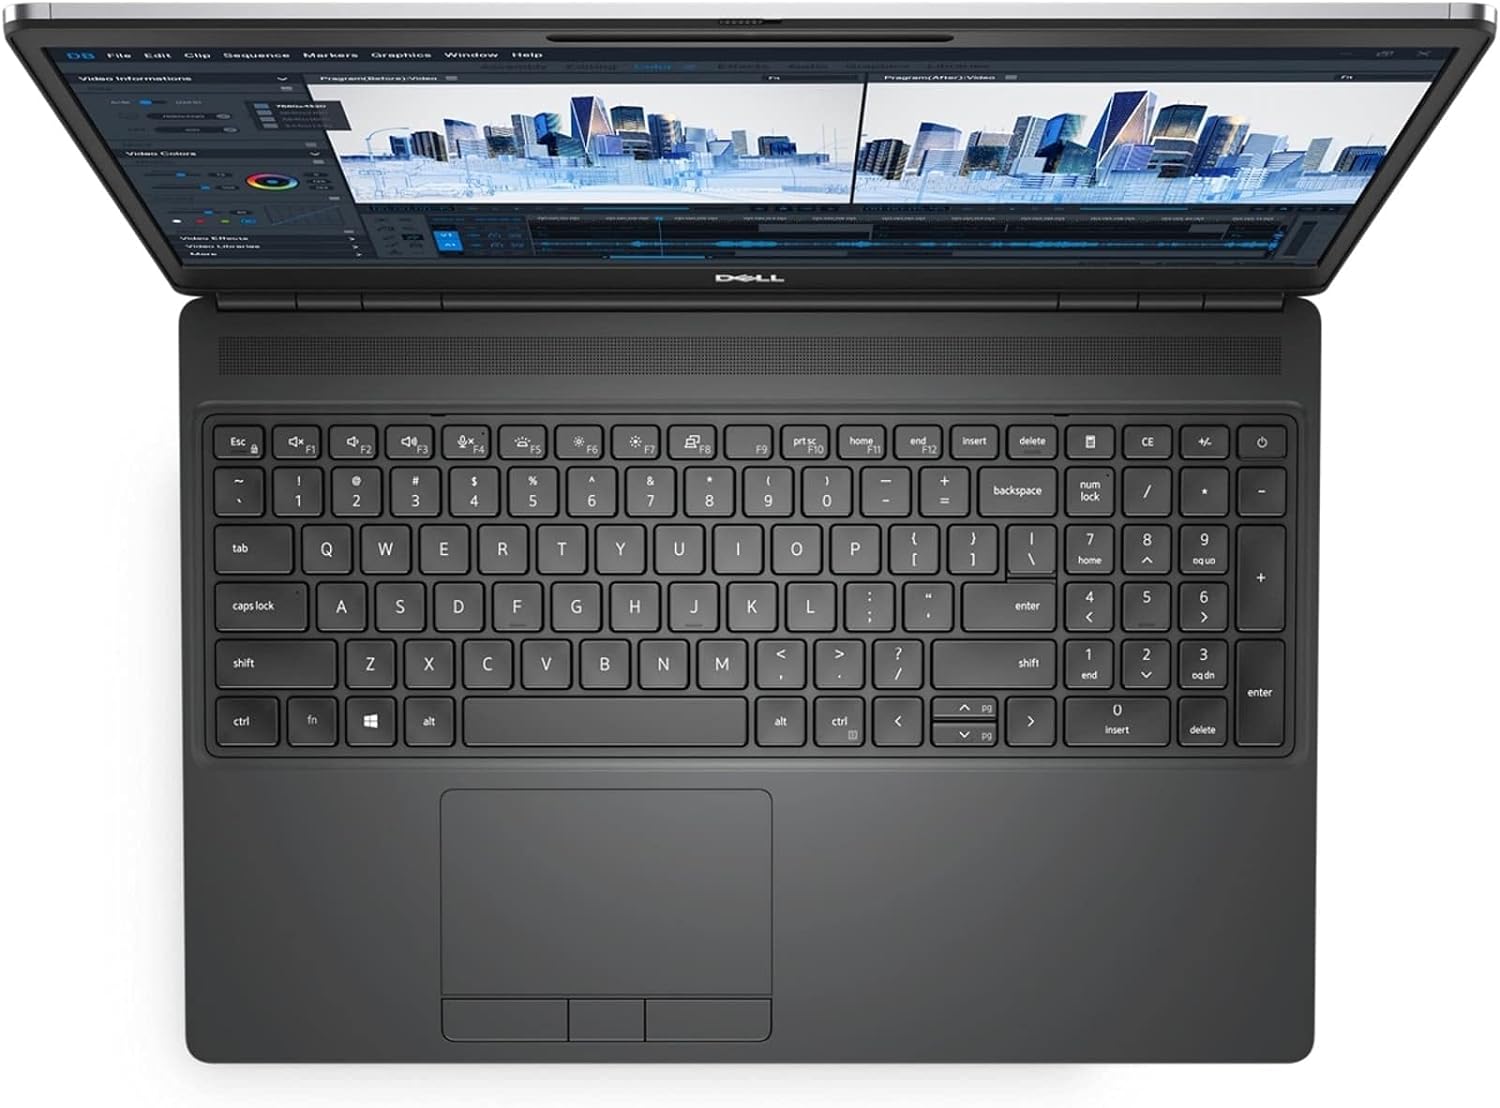 Dell Precision 7000 7560 Workstation Laptop Review